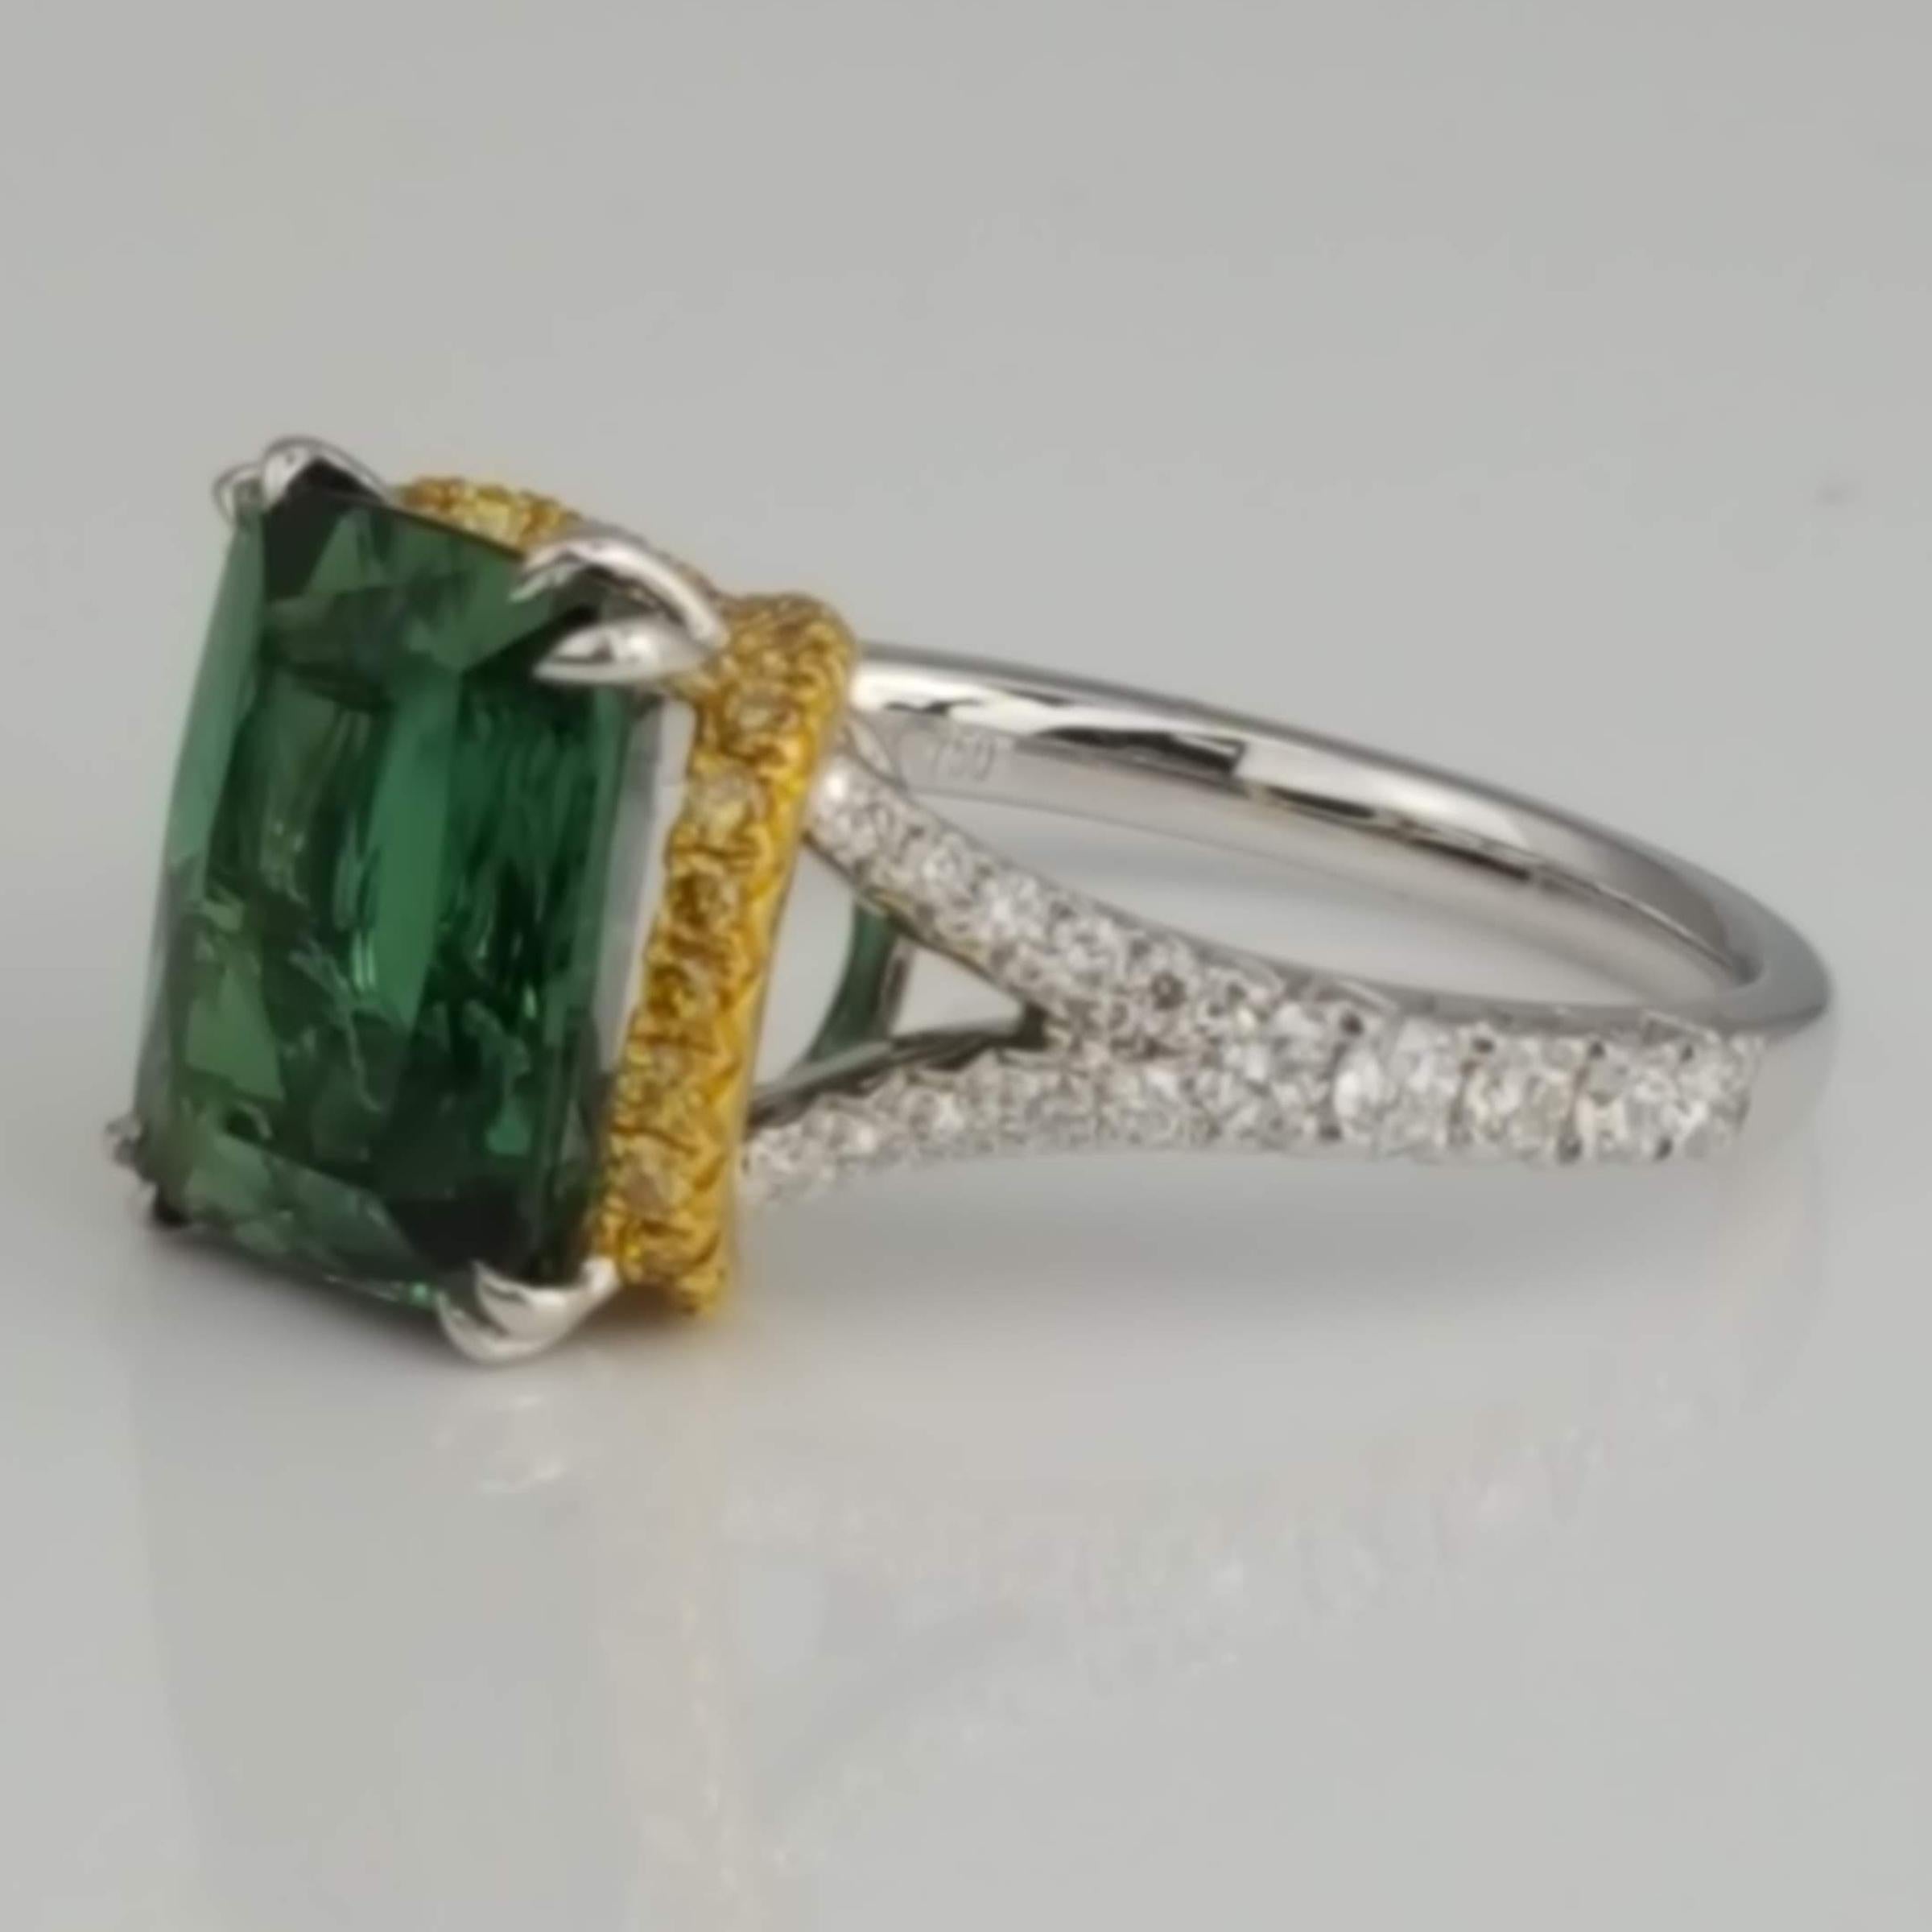 Women's 4.6 Carat Emerald Cut Green Tourmaline and 0.55 Carat Diamond Ring in 18k Gold